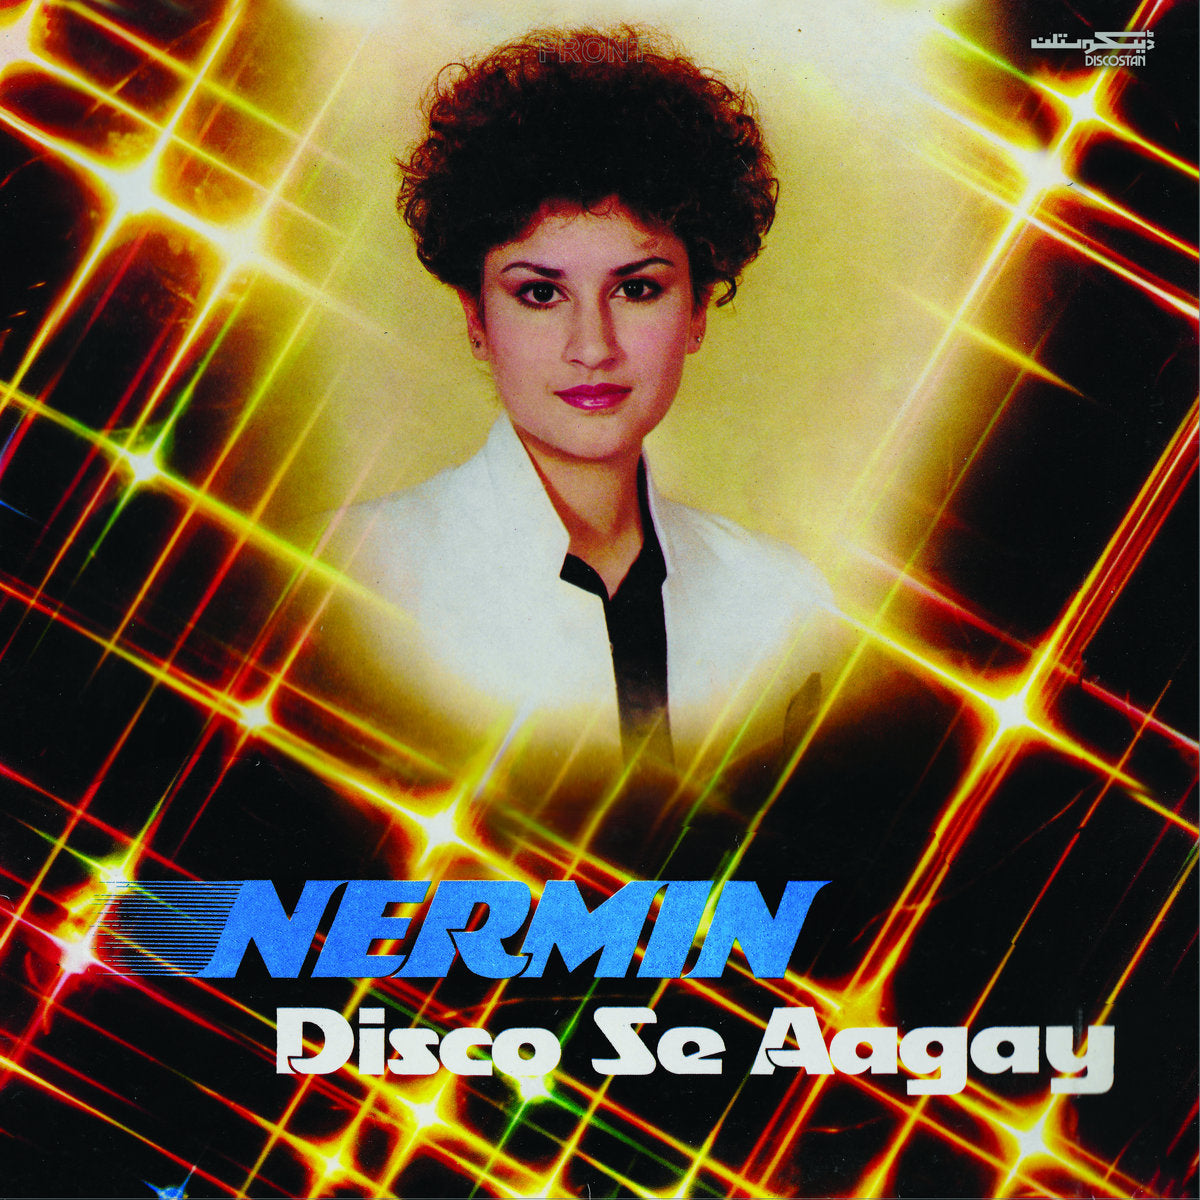 Disco Se Aagay (New LP)